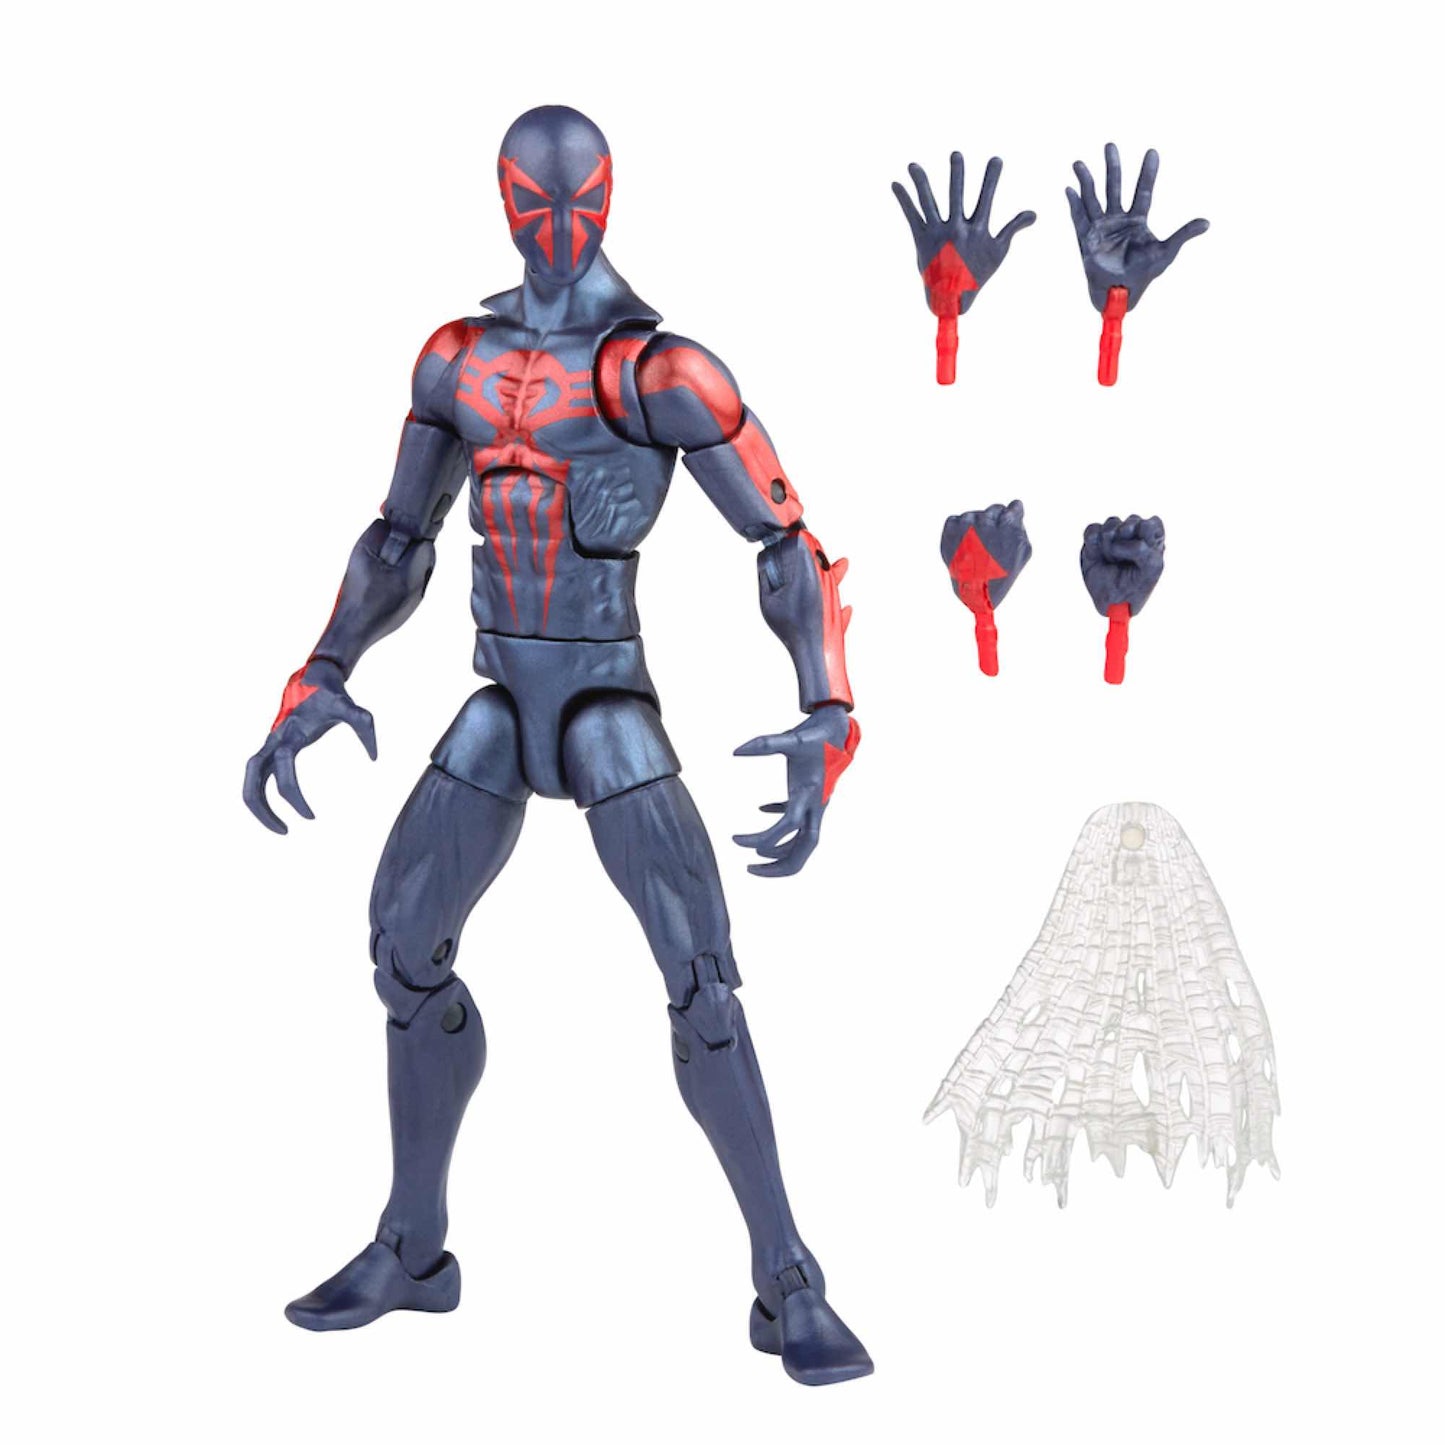 Spider-Man 2099 - Marvel Hasbro Legends Retro